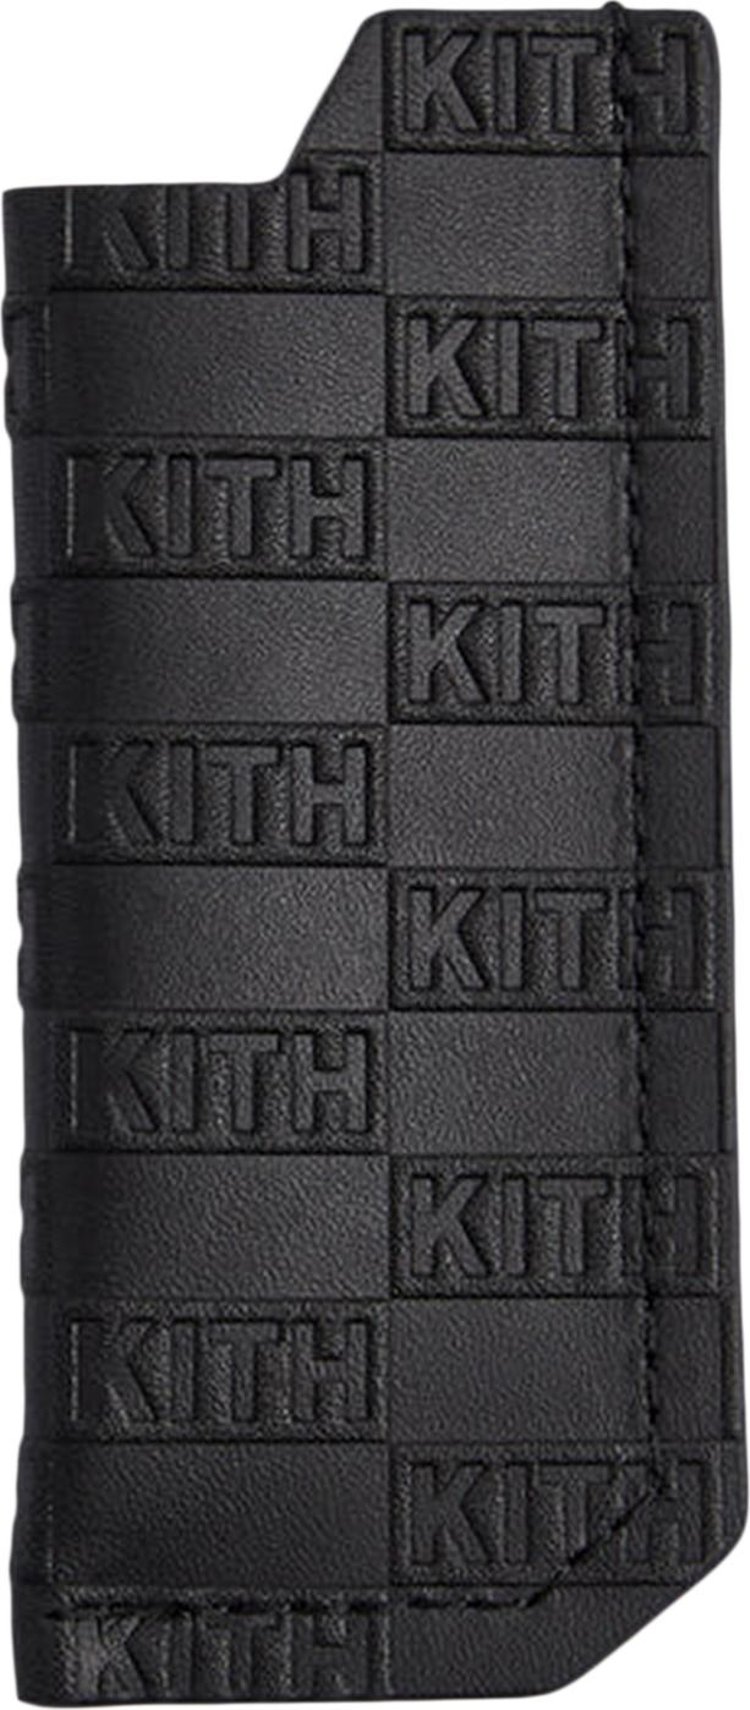 Kith Monogram Leather Lighter Pouch 'Black'